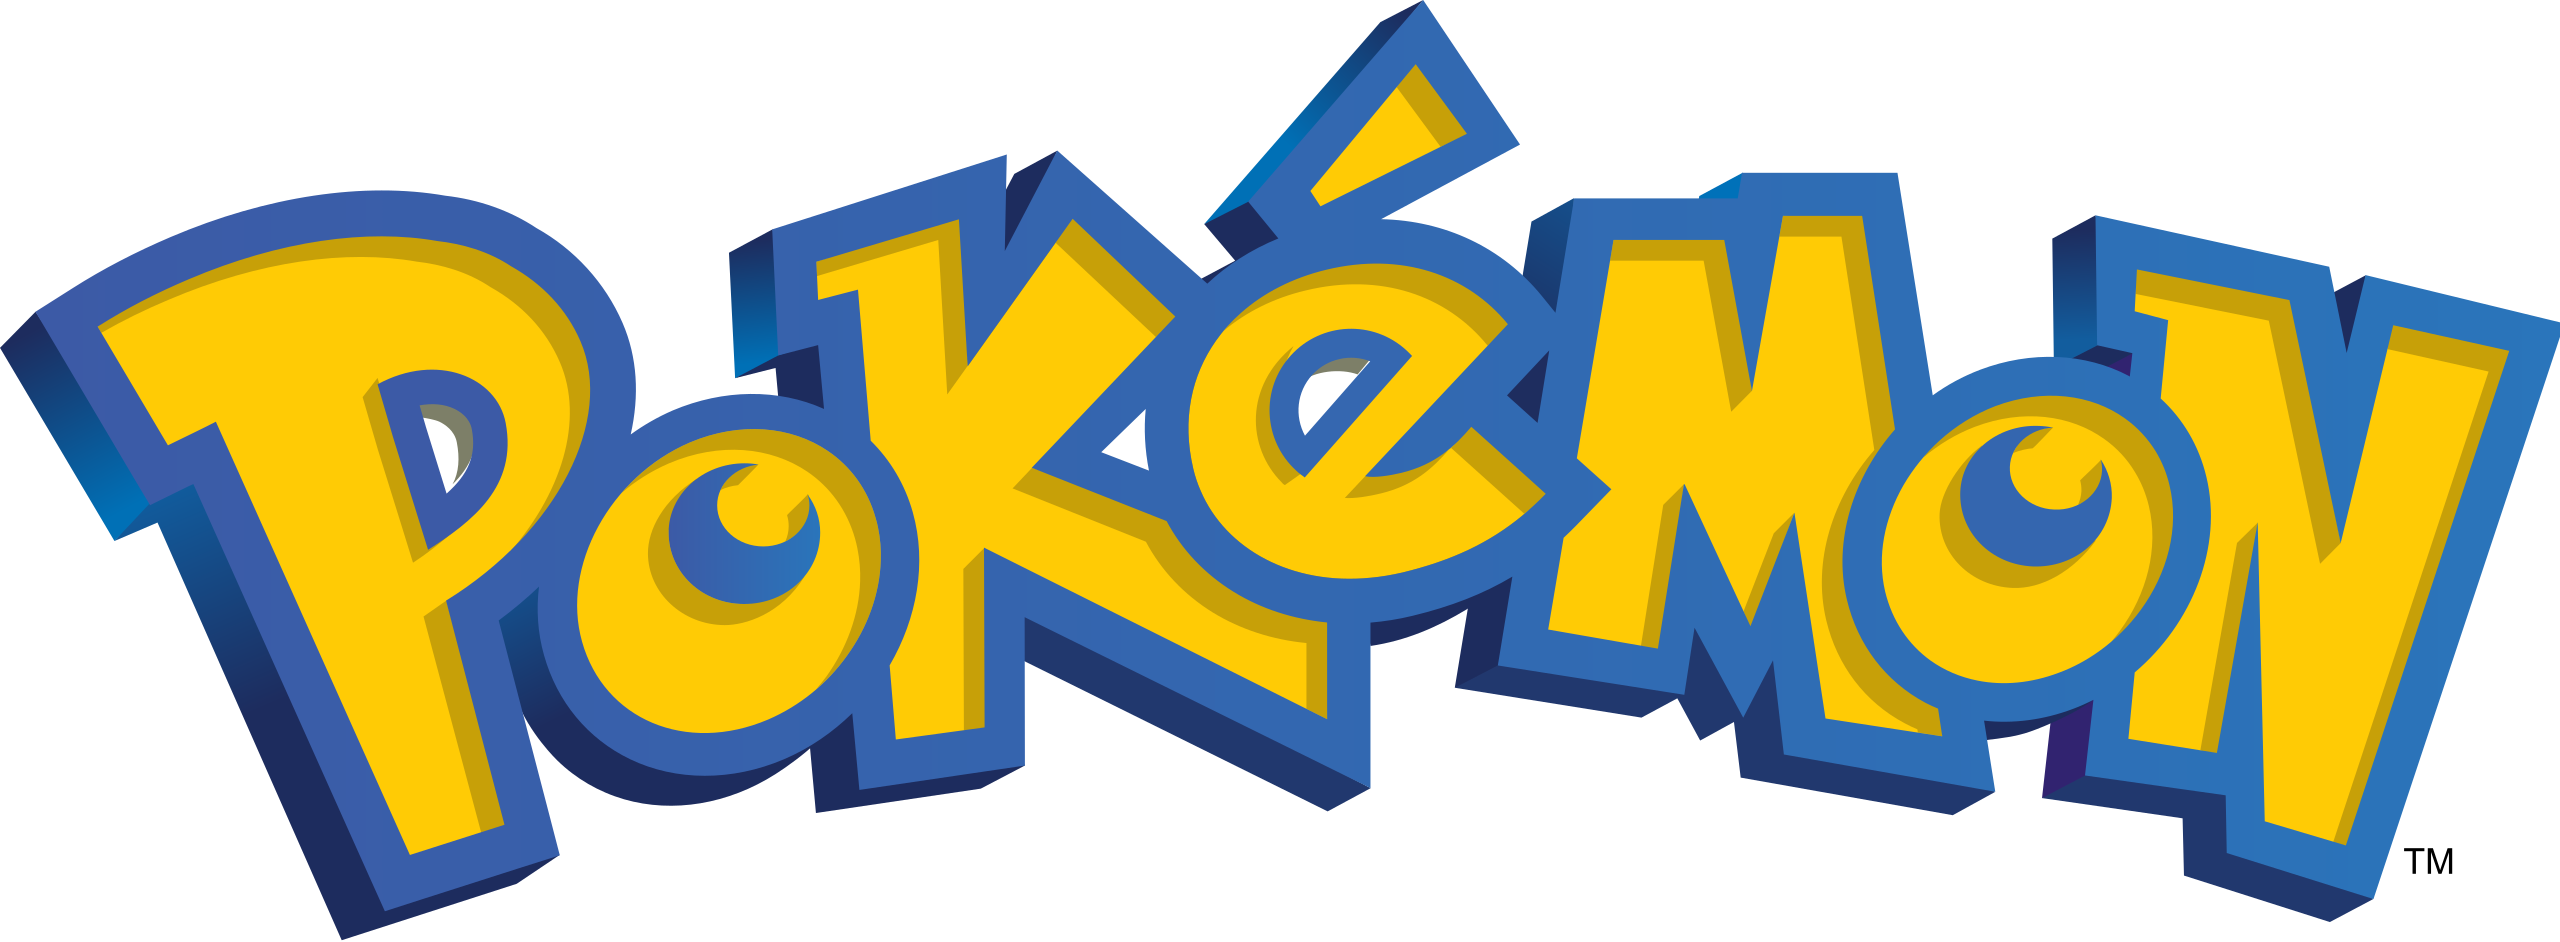 Pokémon Series Quiz (20 Pokémon Trivia questions and answers)